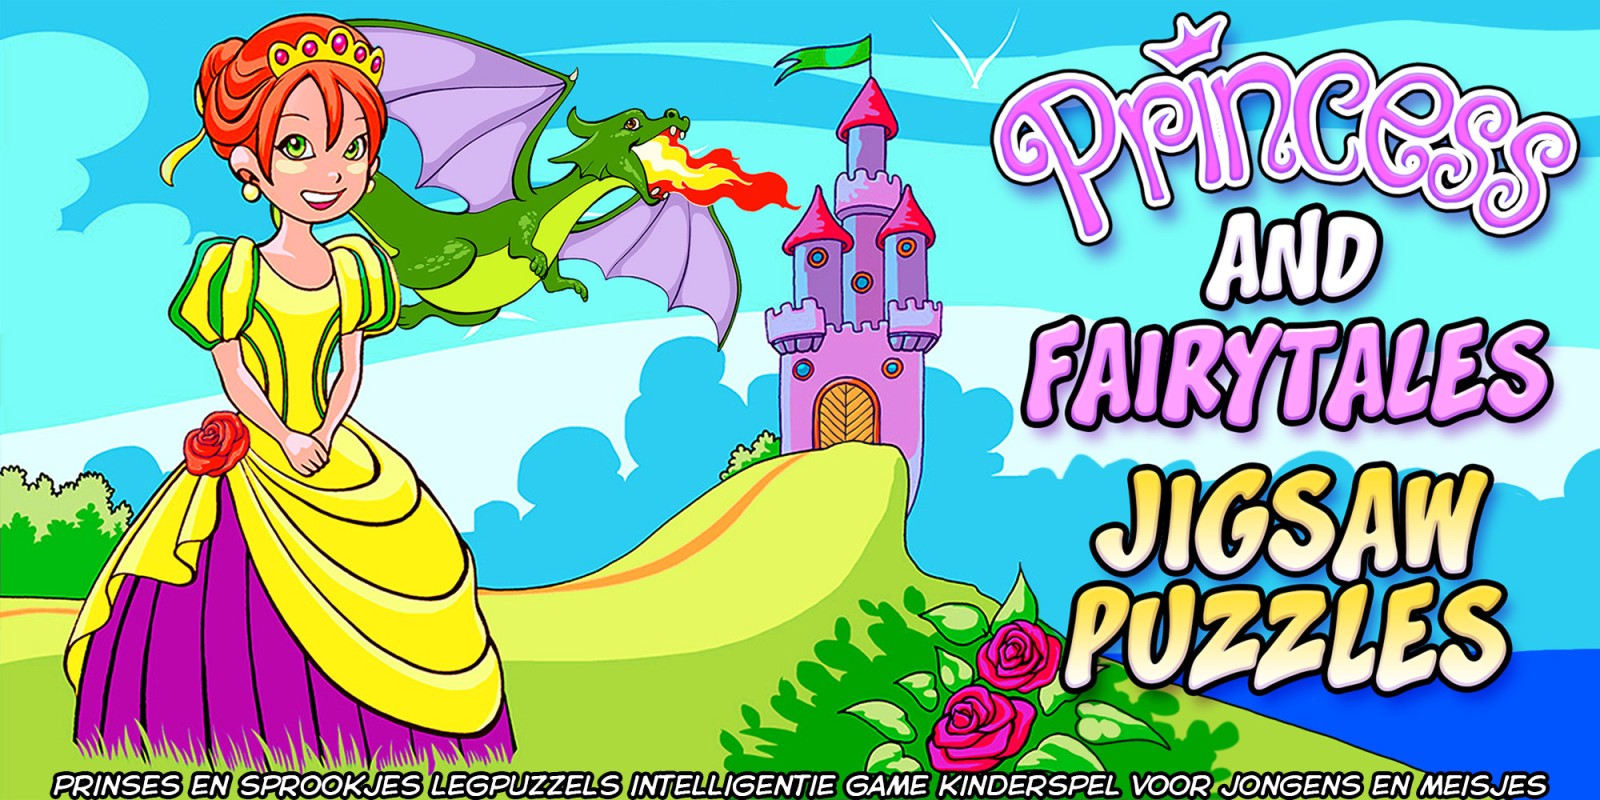 Princess and Fairytales Jigsaw Puzzles - prinses en sprookjes legpuzzels intelligentie game kinderspel voor jongens en meisjes